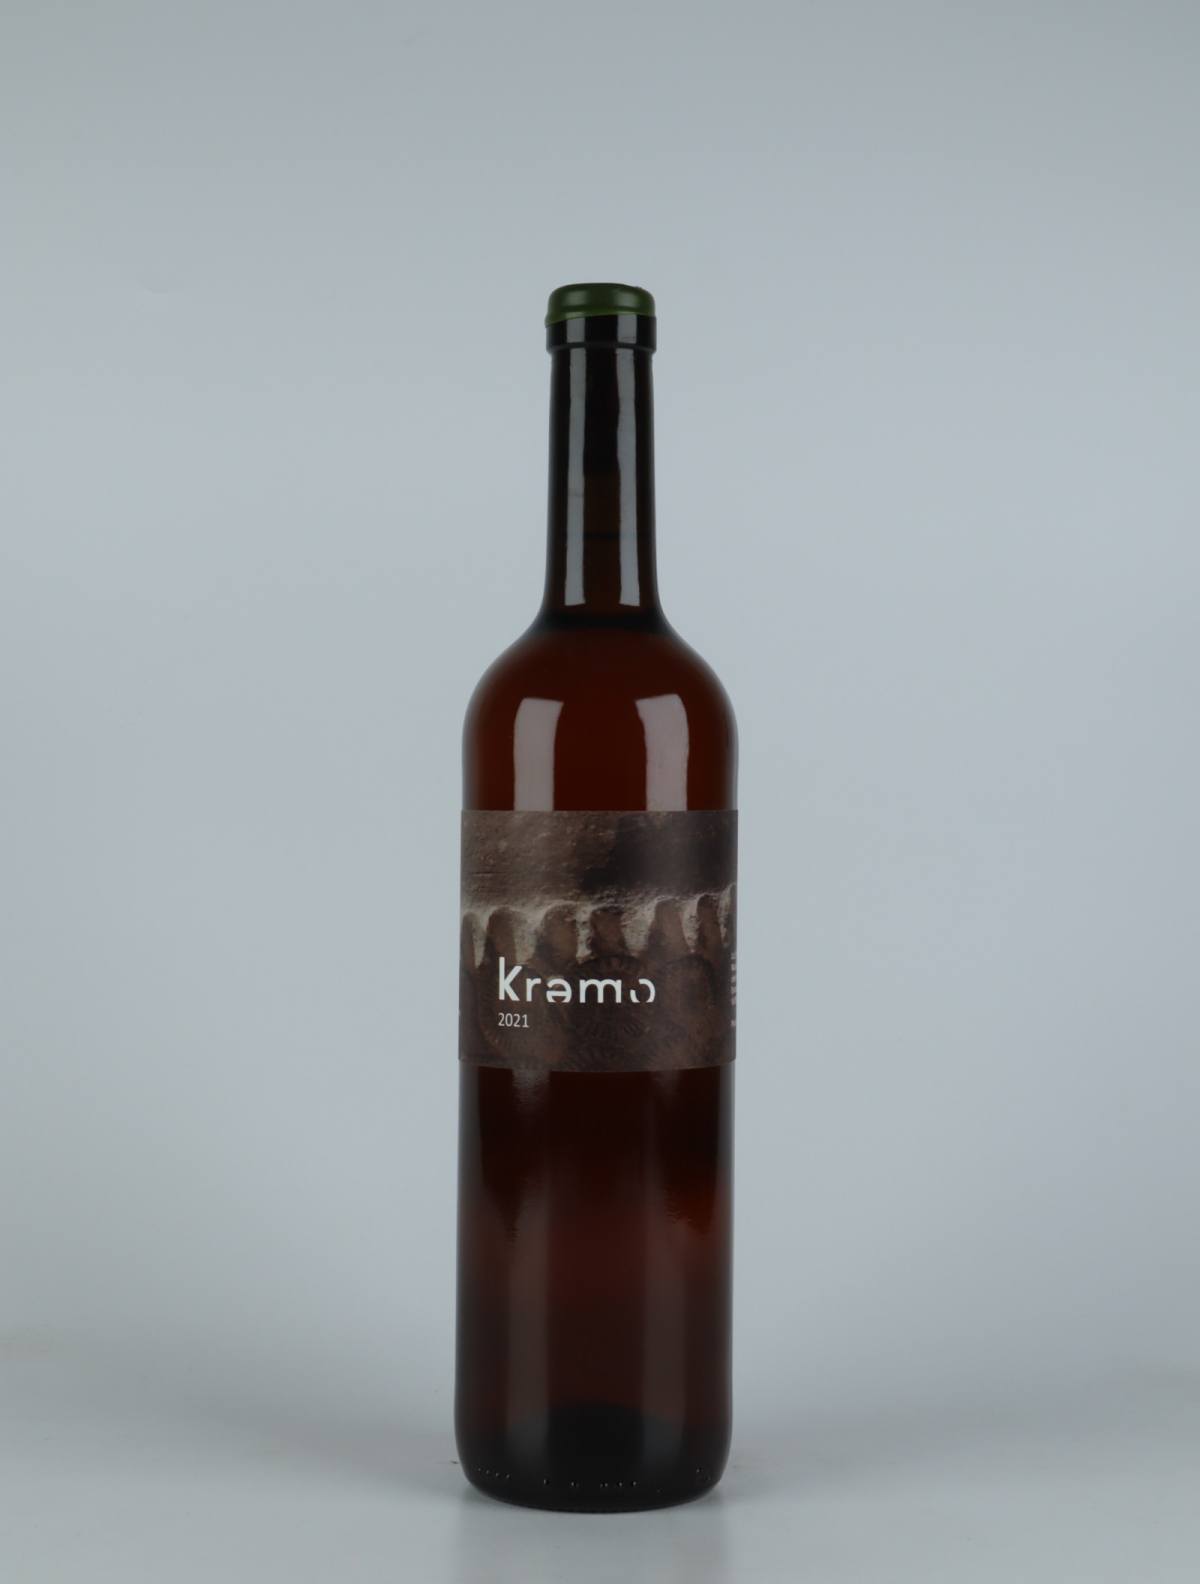 A bottle 2021 Kremo Orange wine from Jordi Llorens, Catalonia in Spain